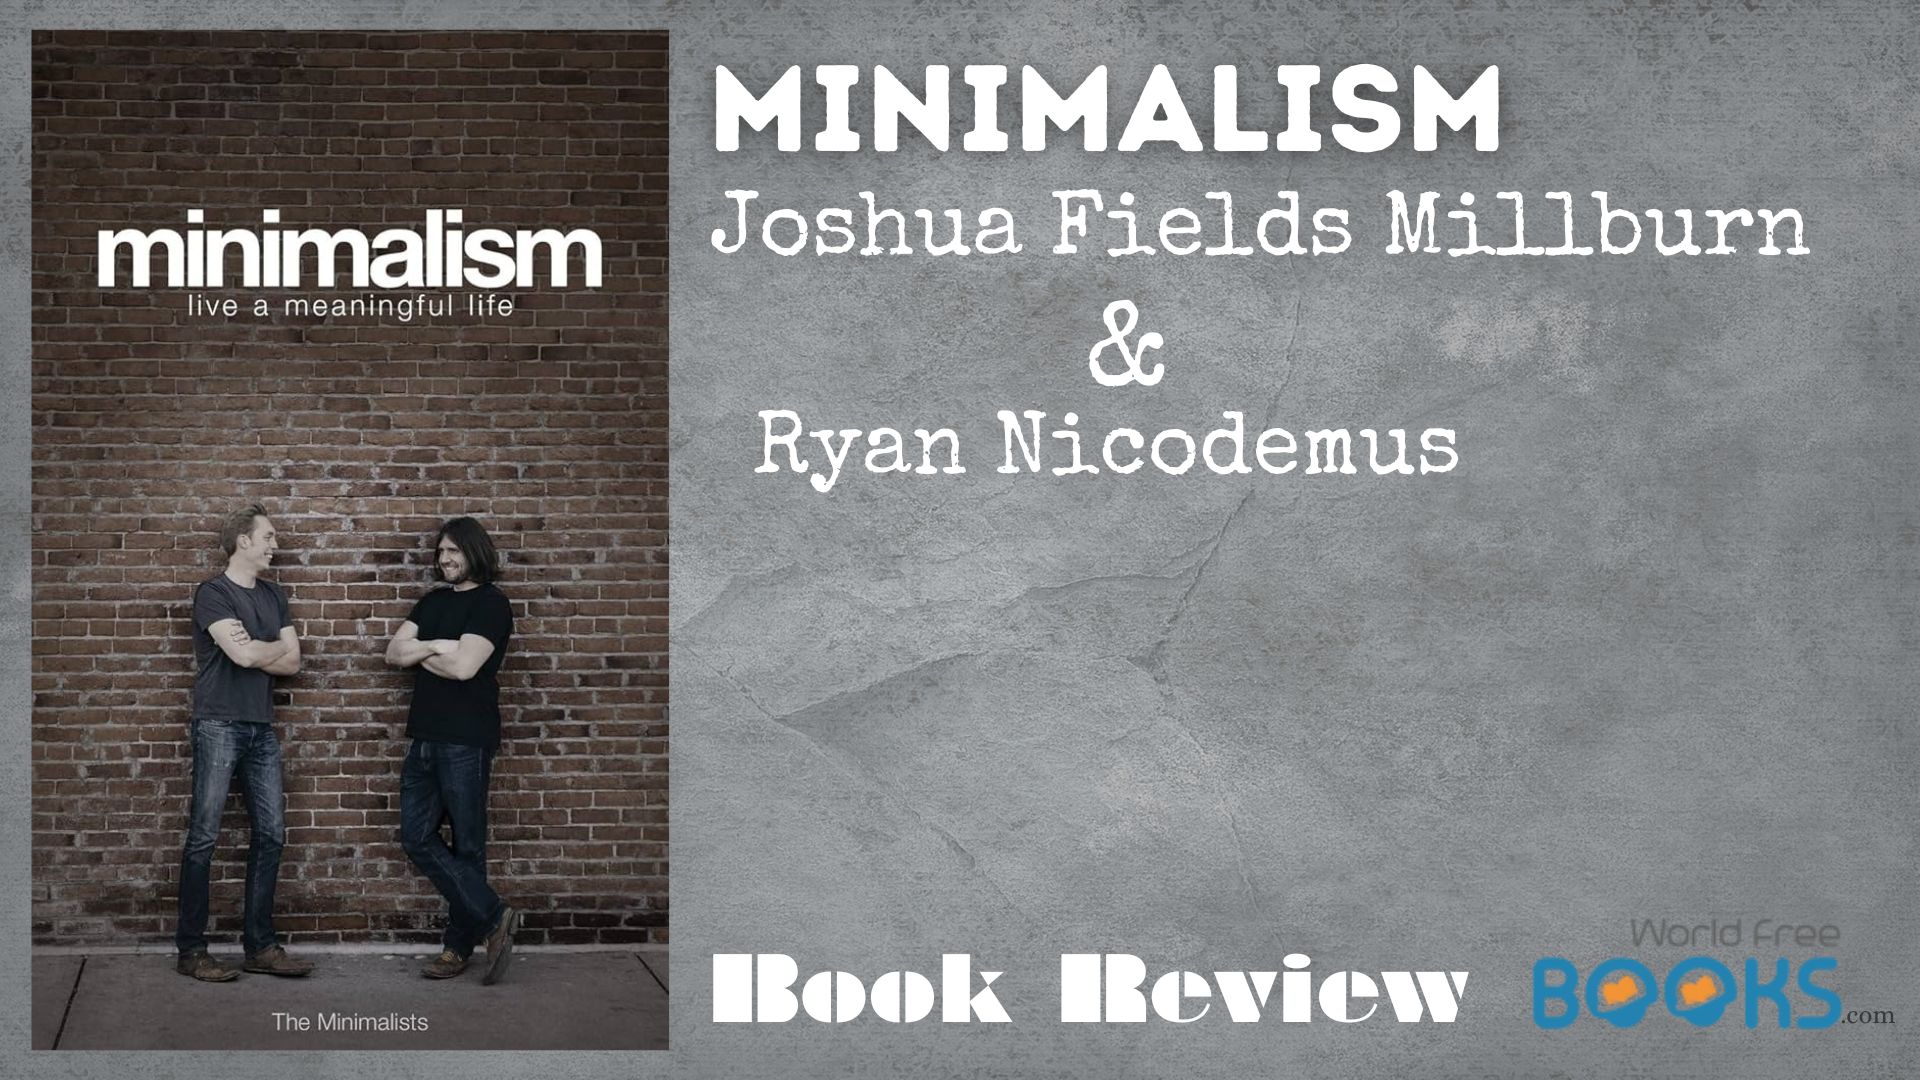 Minimalism by Joshua Fields Millburn Minimalism book review